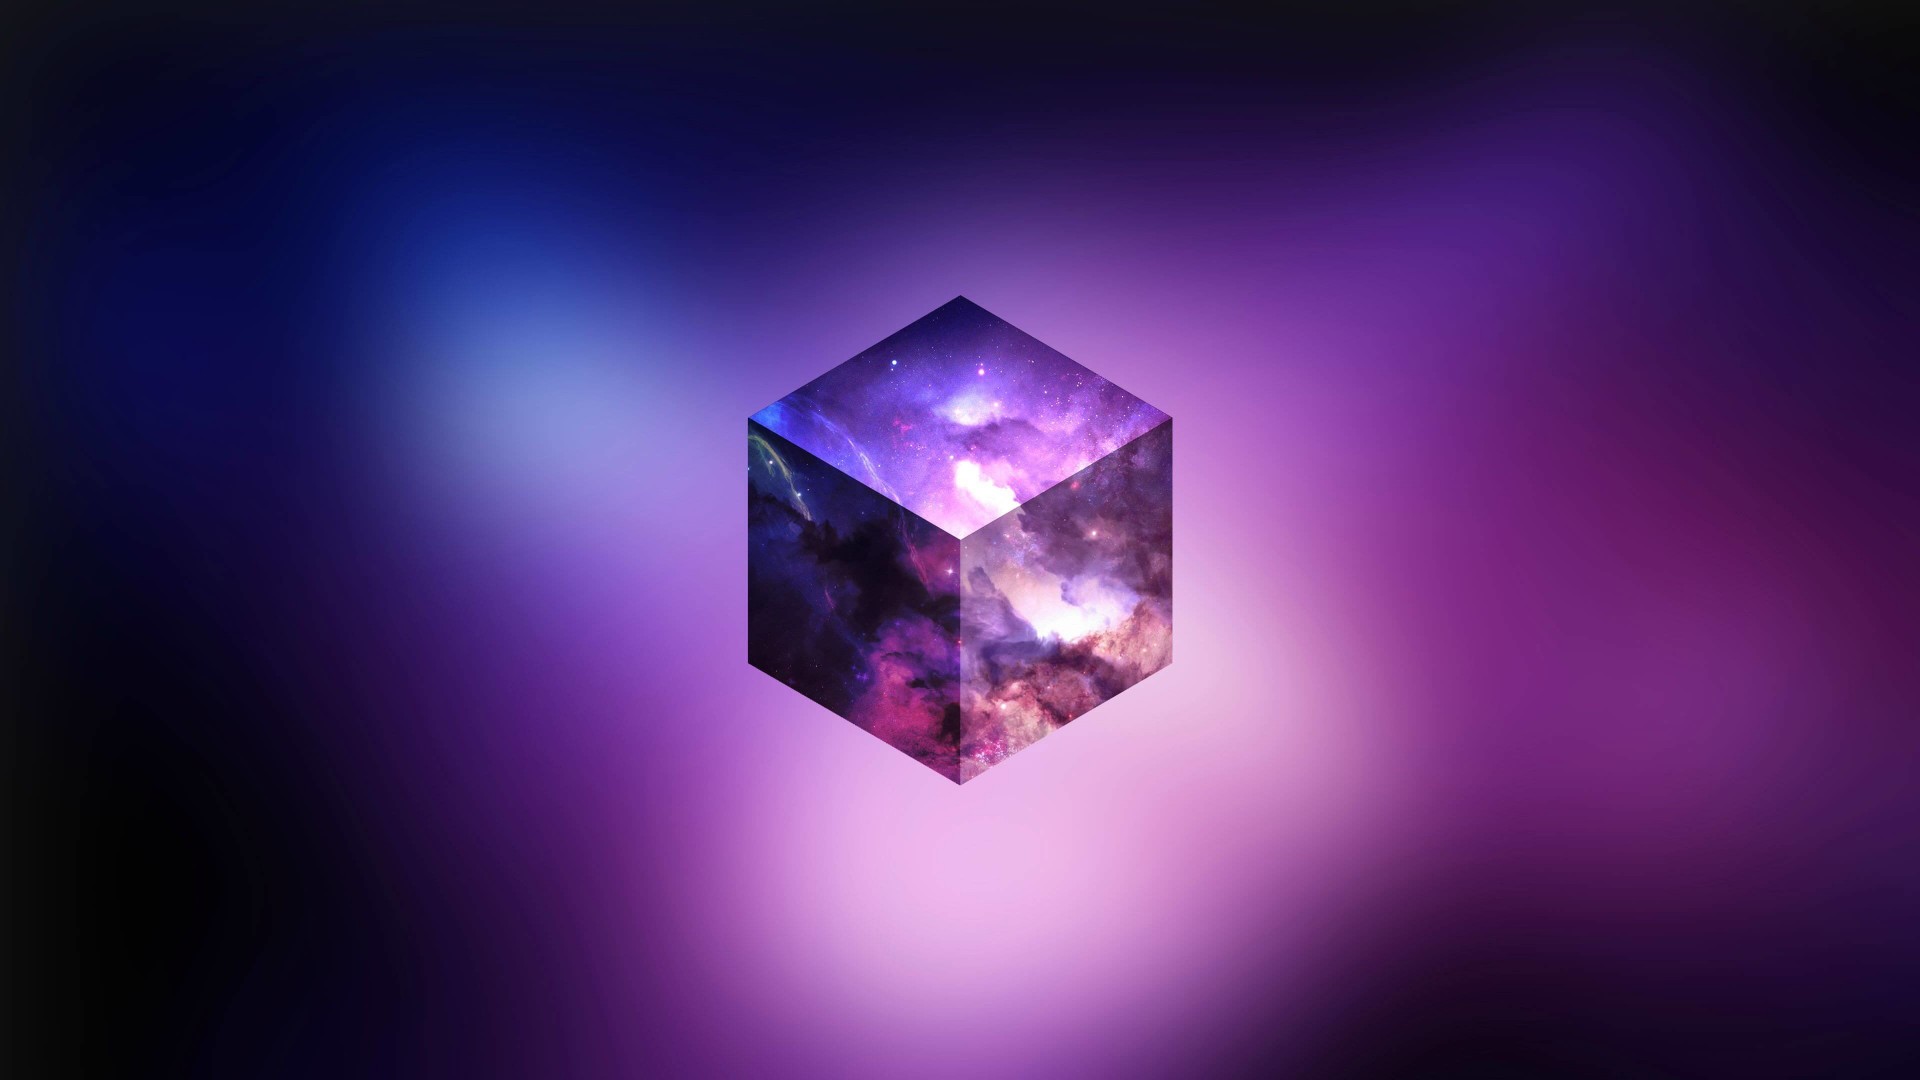 Cosmic Cube Wallpaper for Desktop 1920x1080